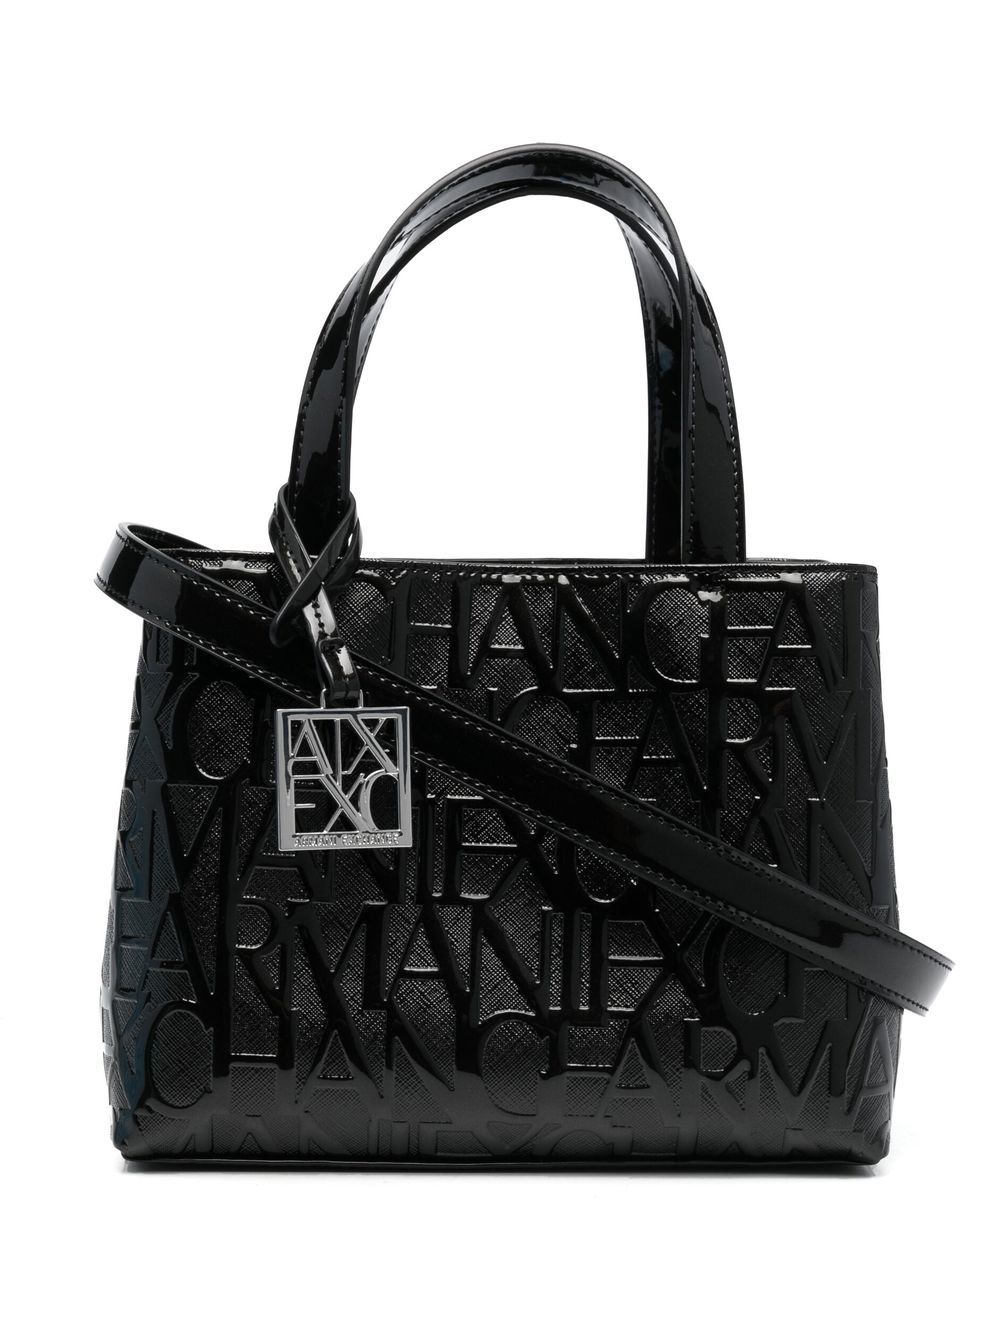 Armani Exchange all-over embossed logo tote - Black von Armani Exchange